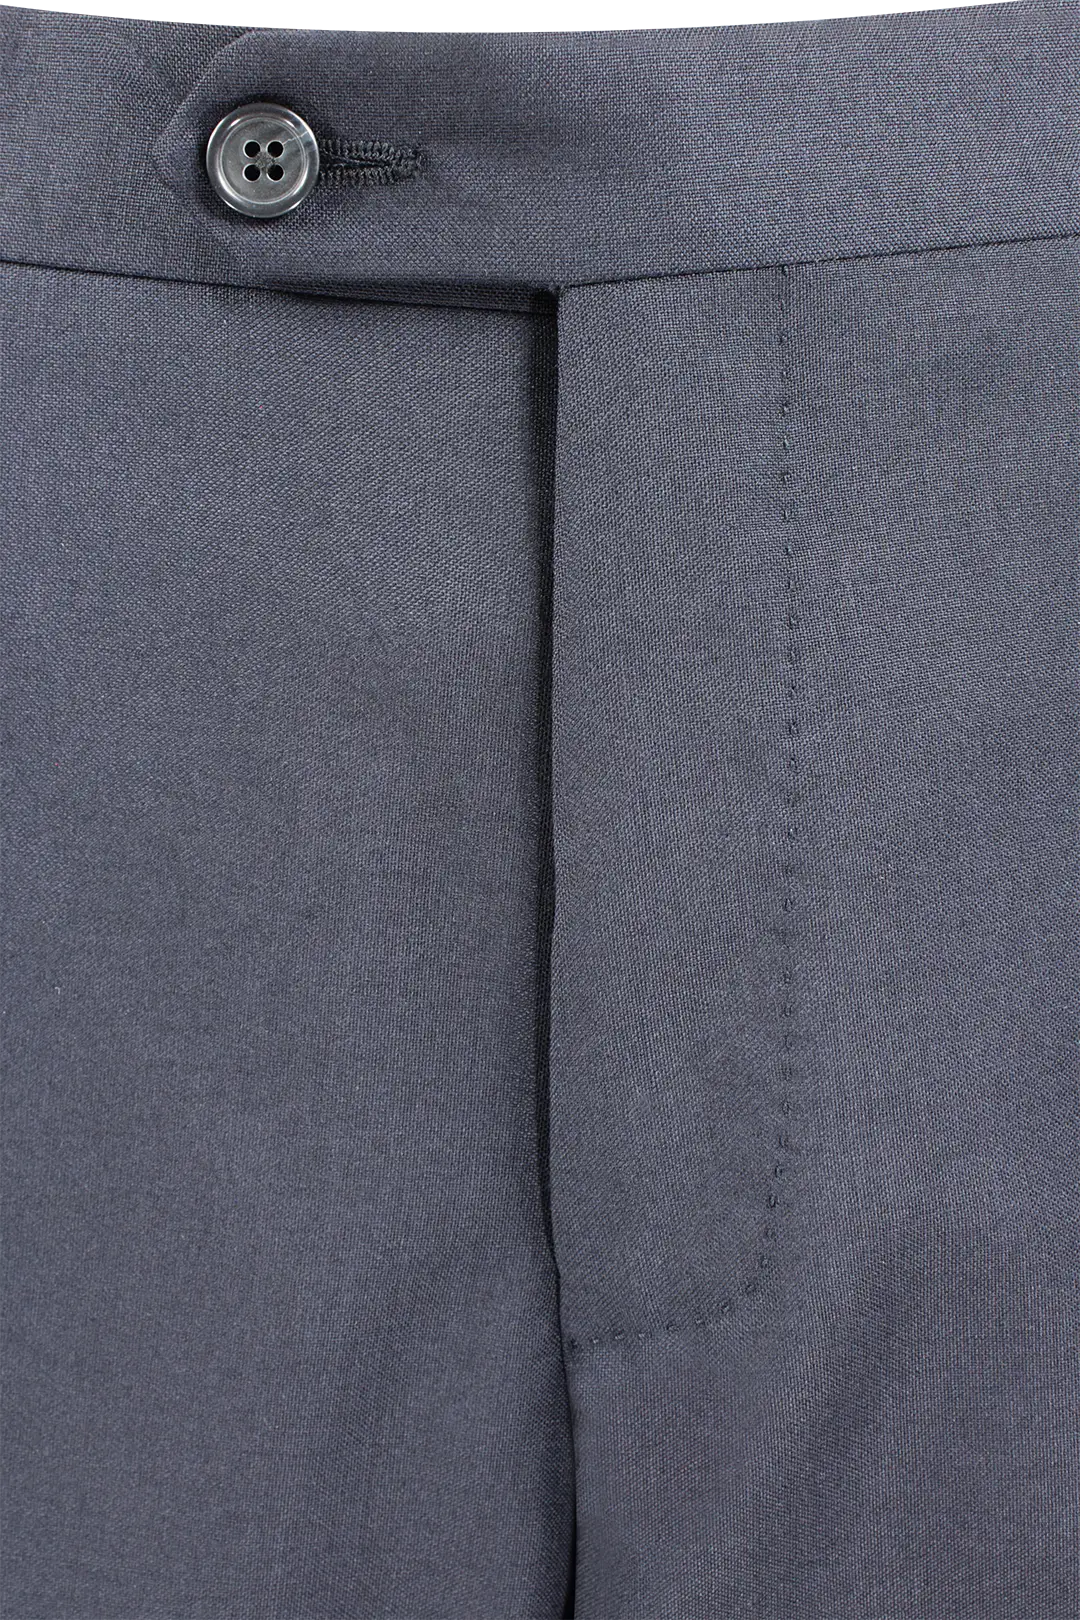 Pantalone in tela di lana vergine blu navy bottone